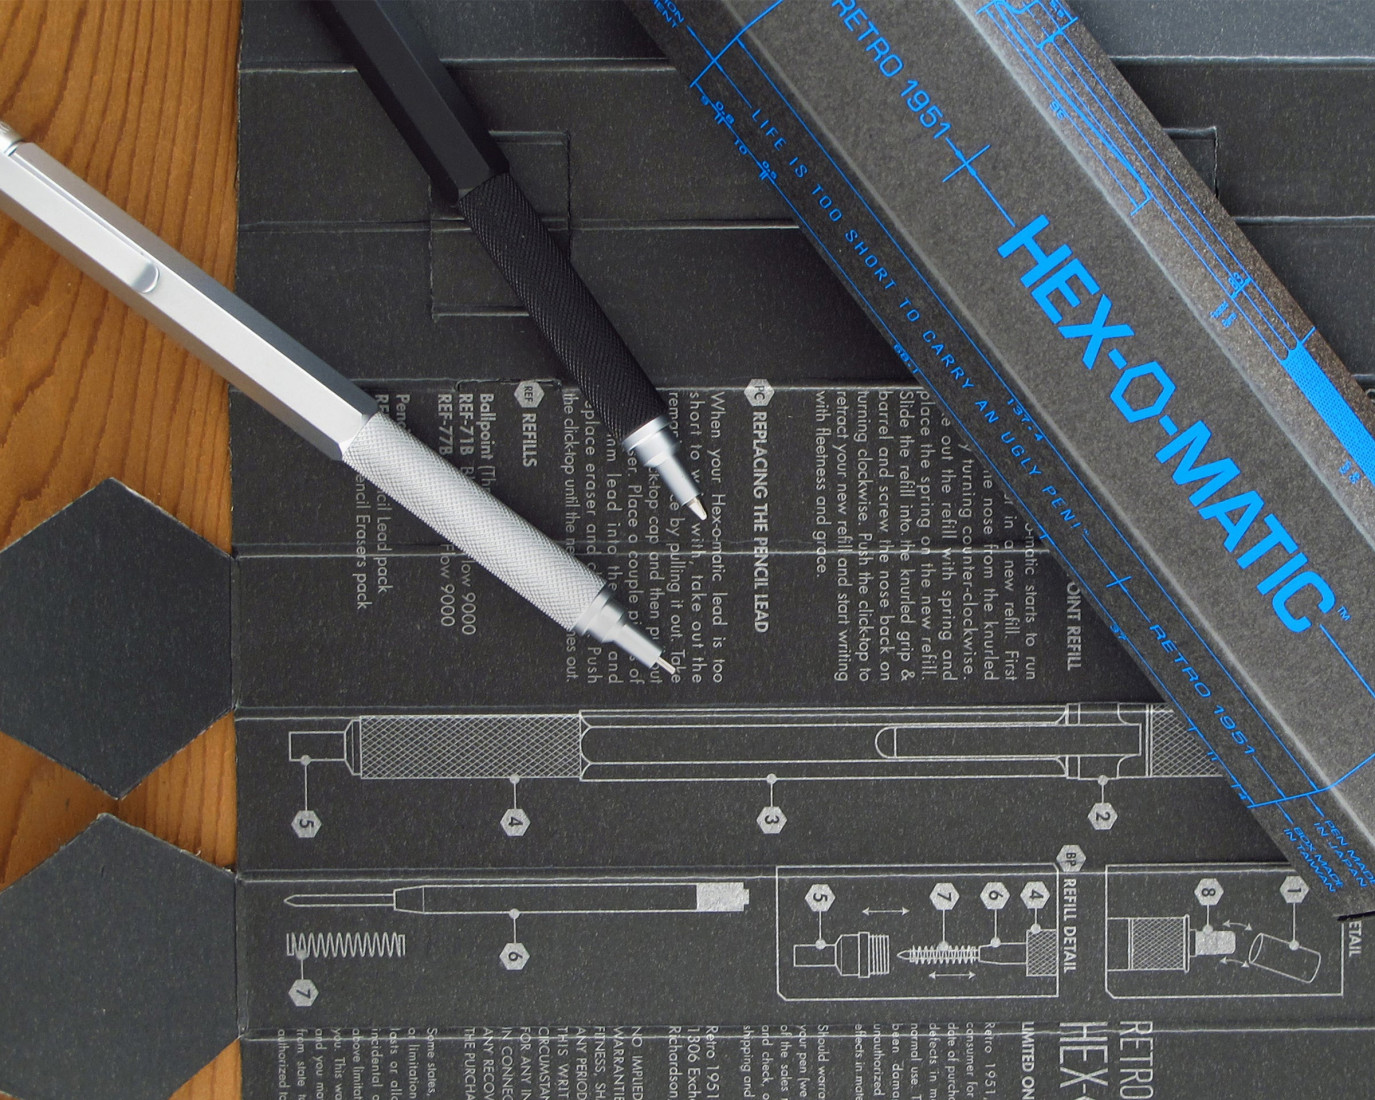 RETRO 1951 HEX-O-MATIC - Black Pencil 0.7mm